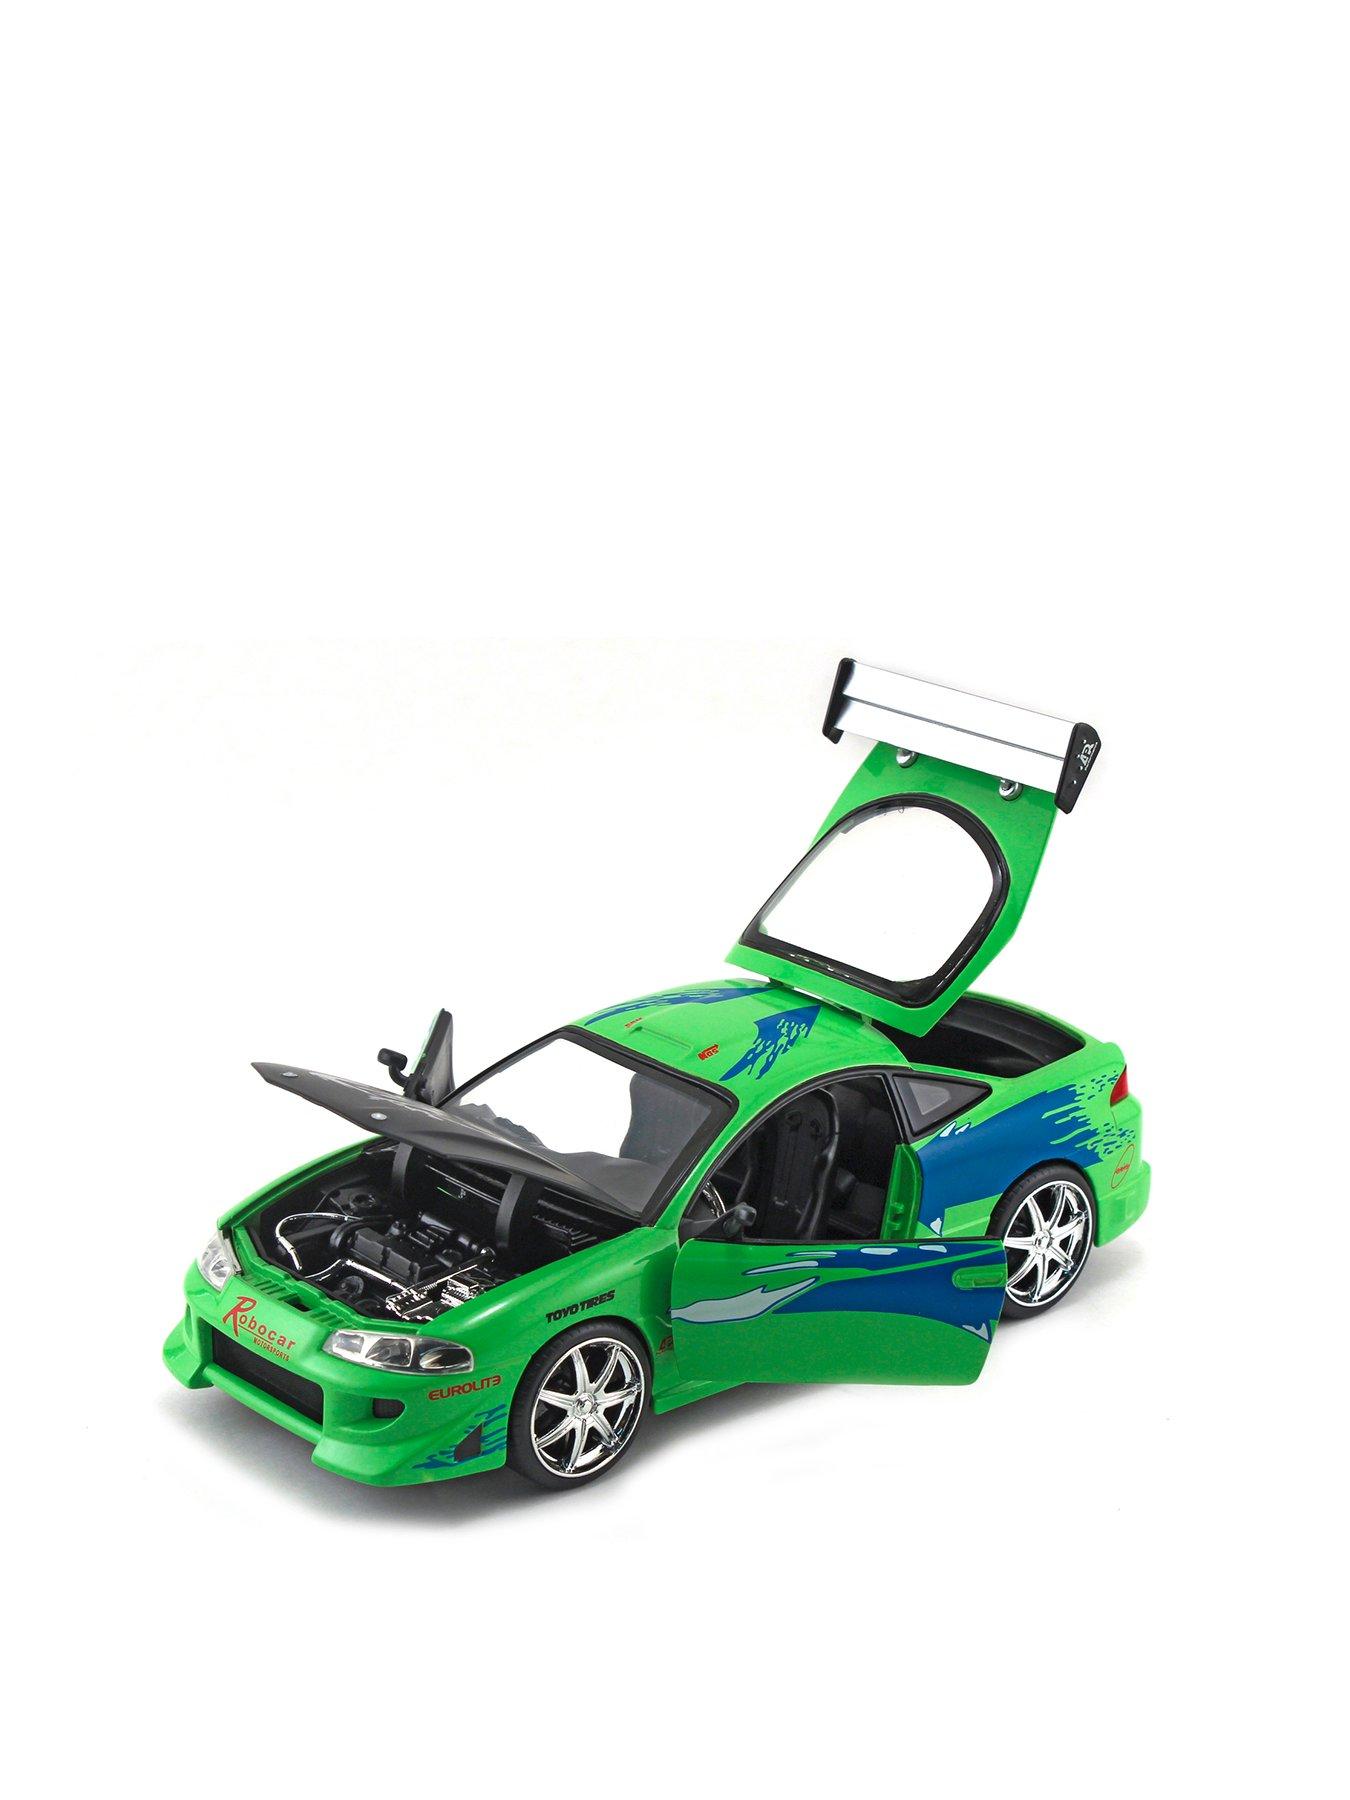 Jada Toys 1:24 Fast & Furious Brian's Mitsubishi Eclipse Play Vehicle 